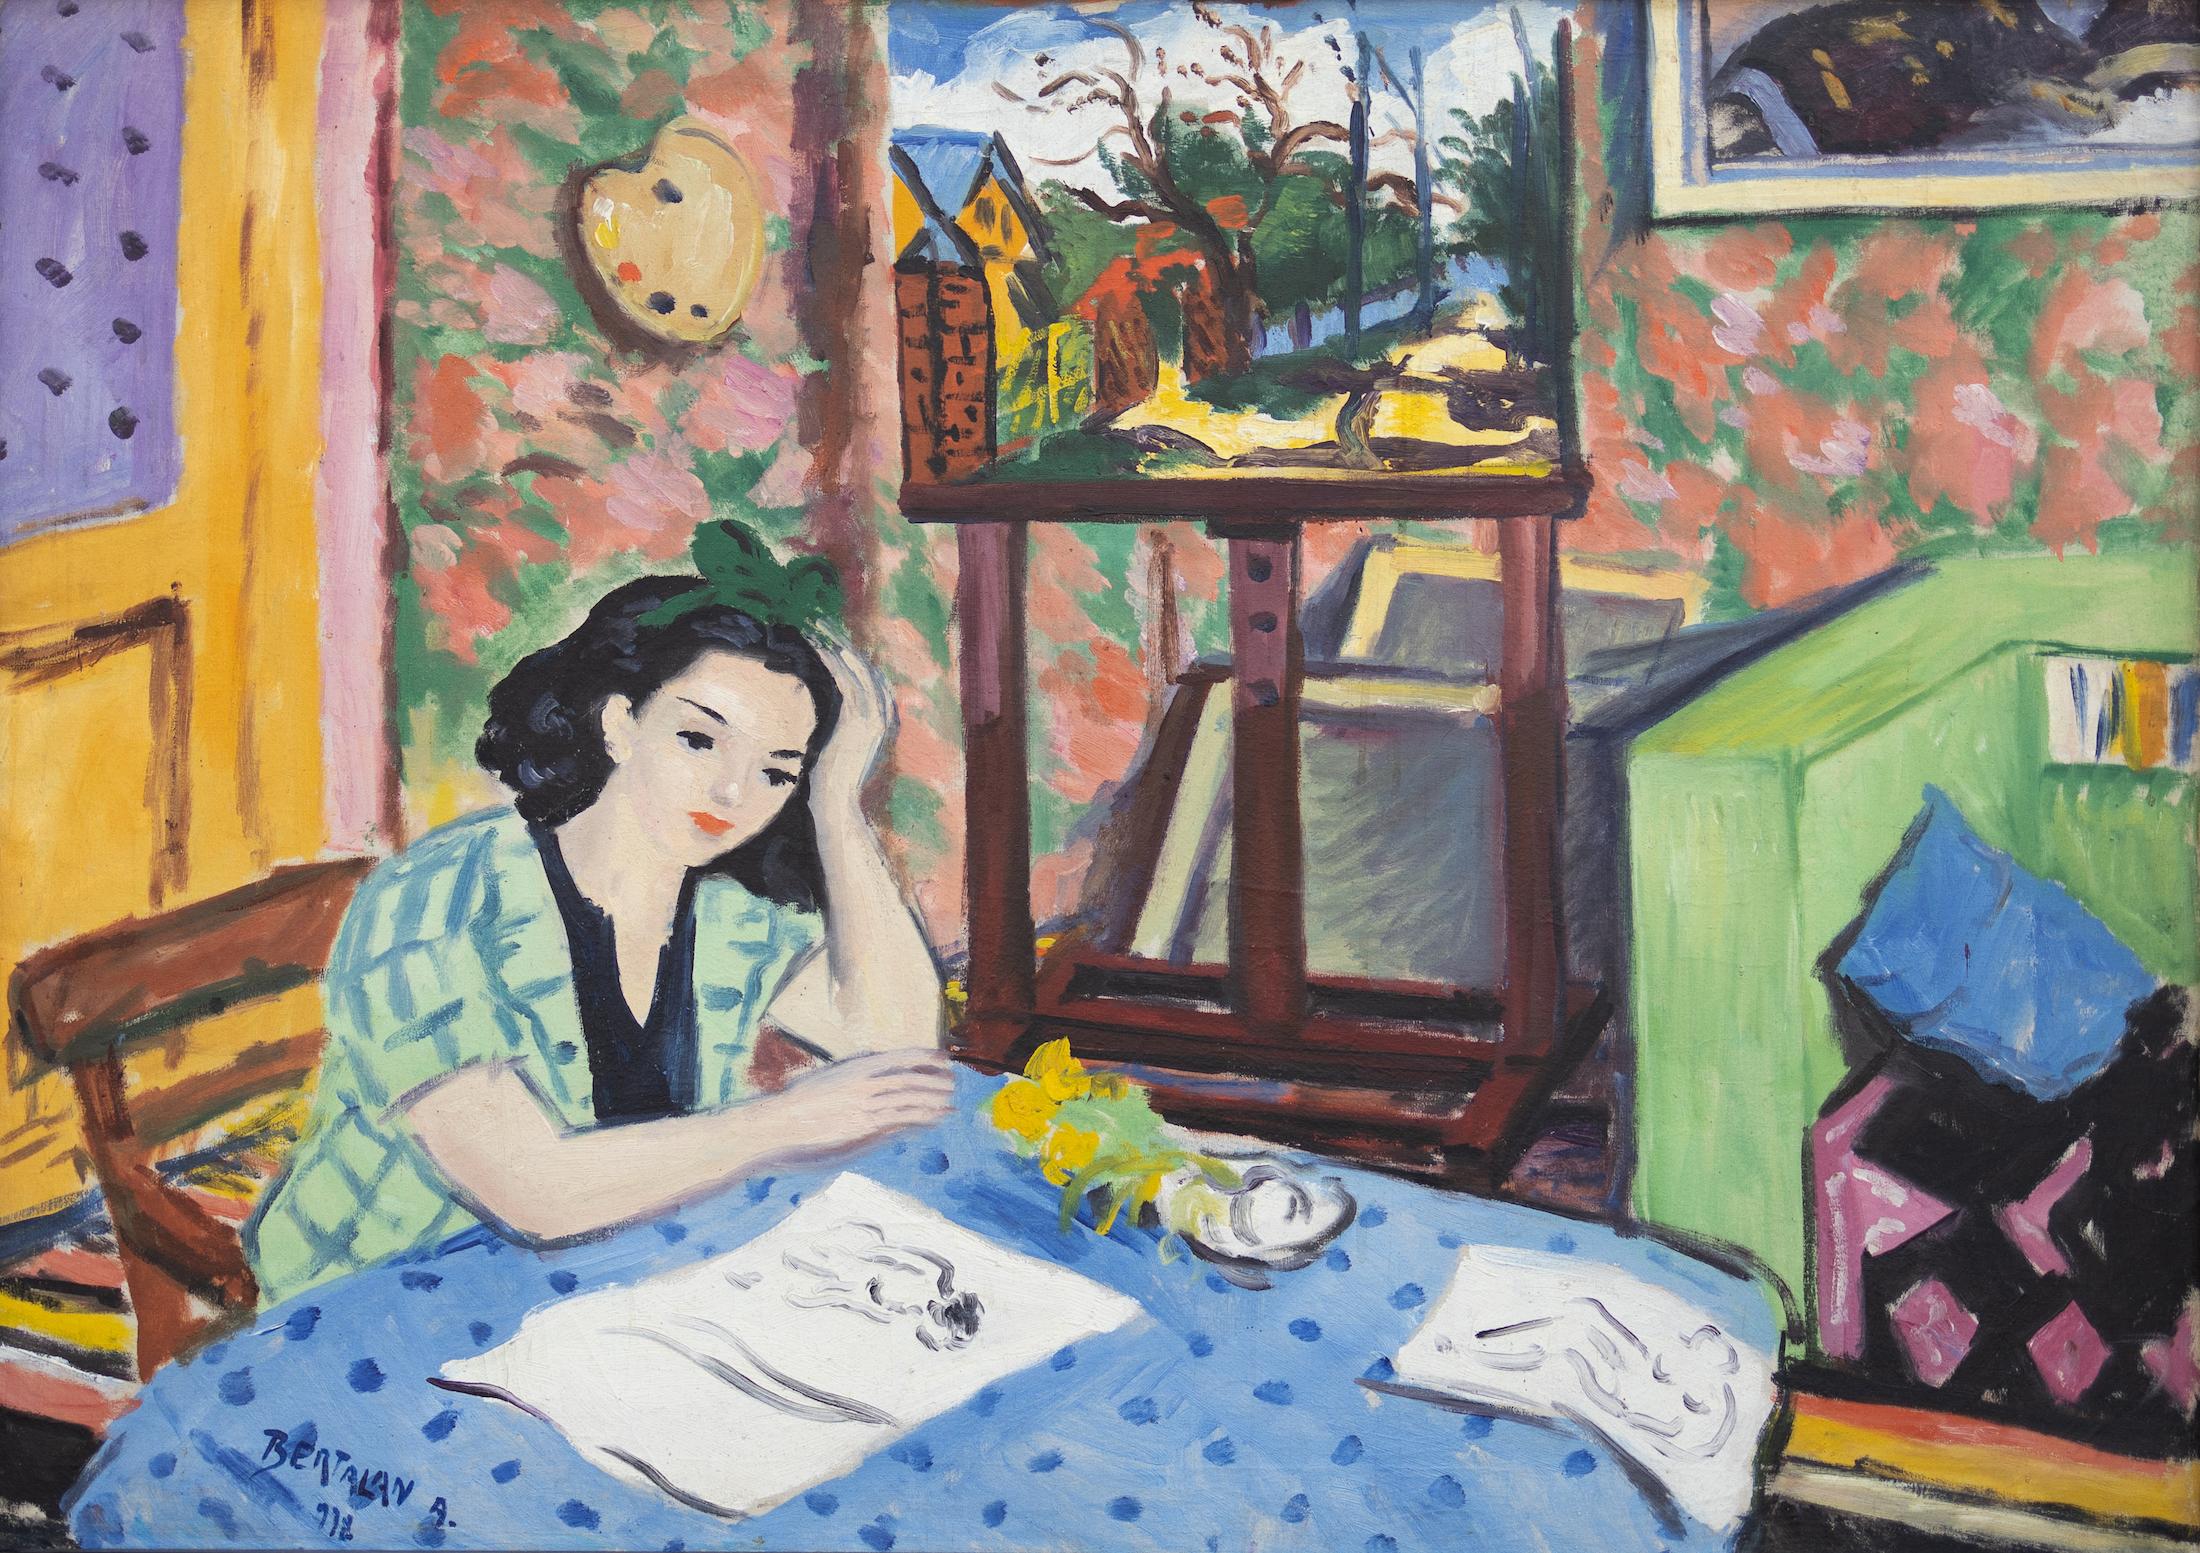 Albert Bertalan Figurative Painting - "Jeune Fille Pensive (Pensive Girl)" colorful interior portrait of a woman